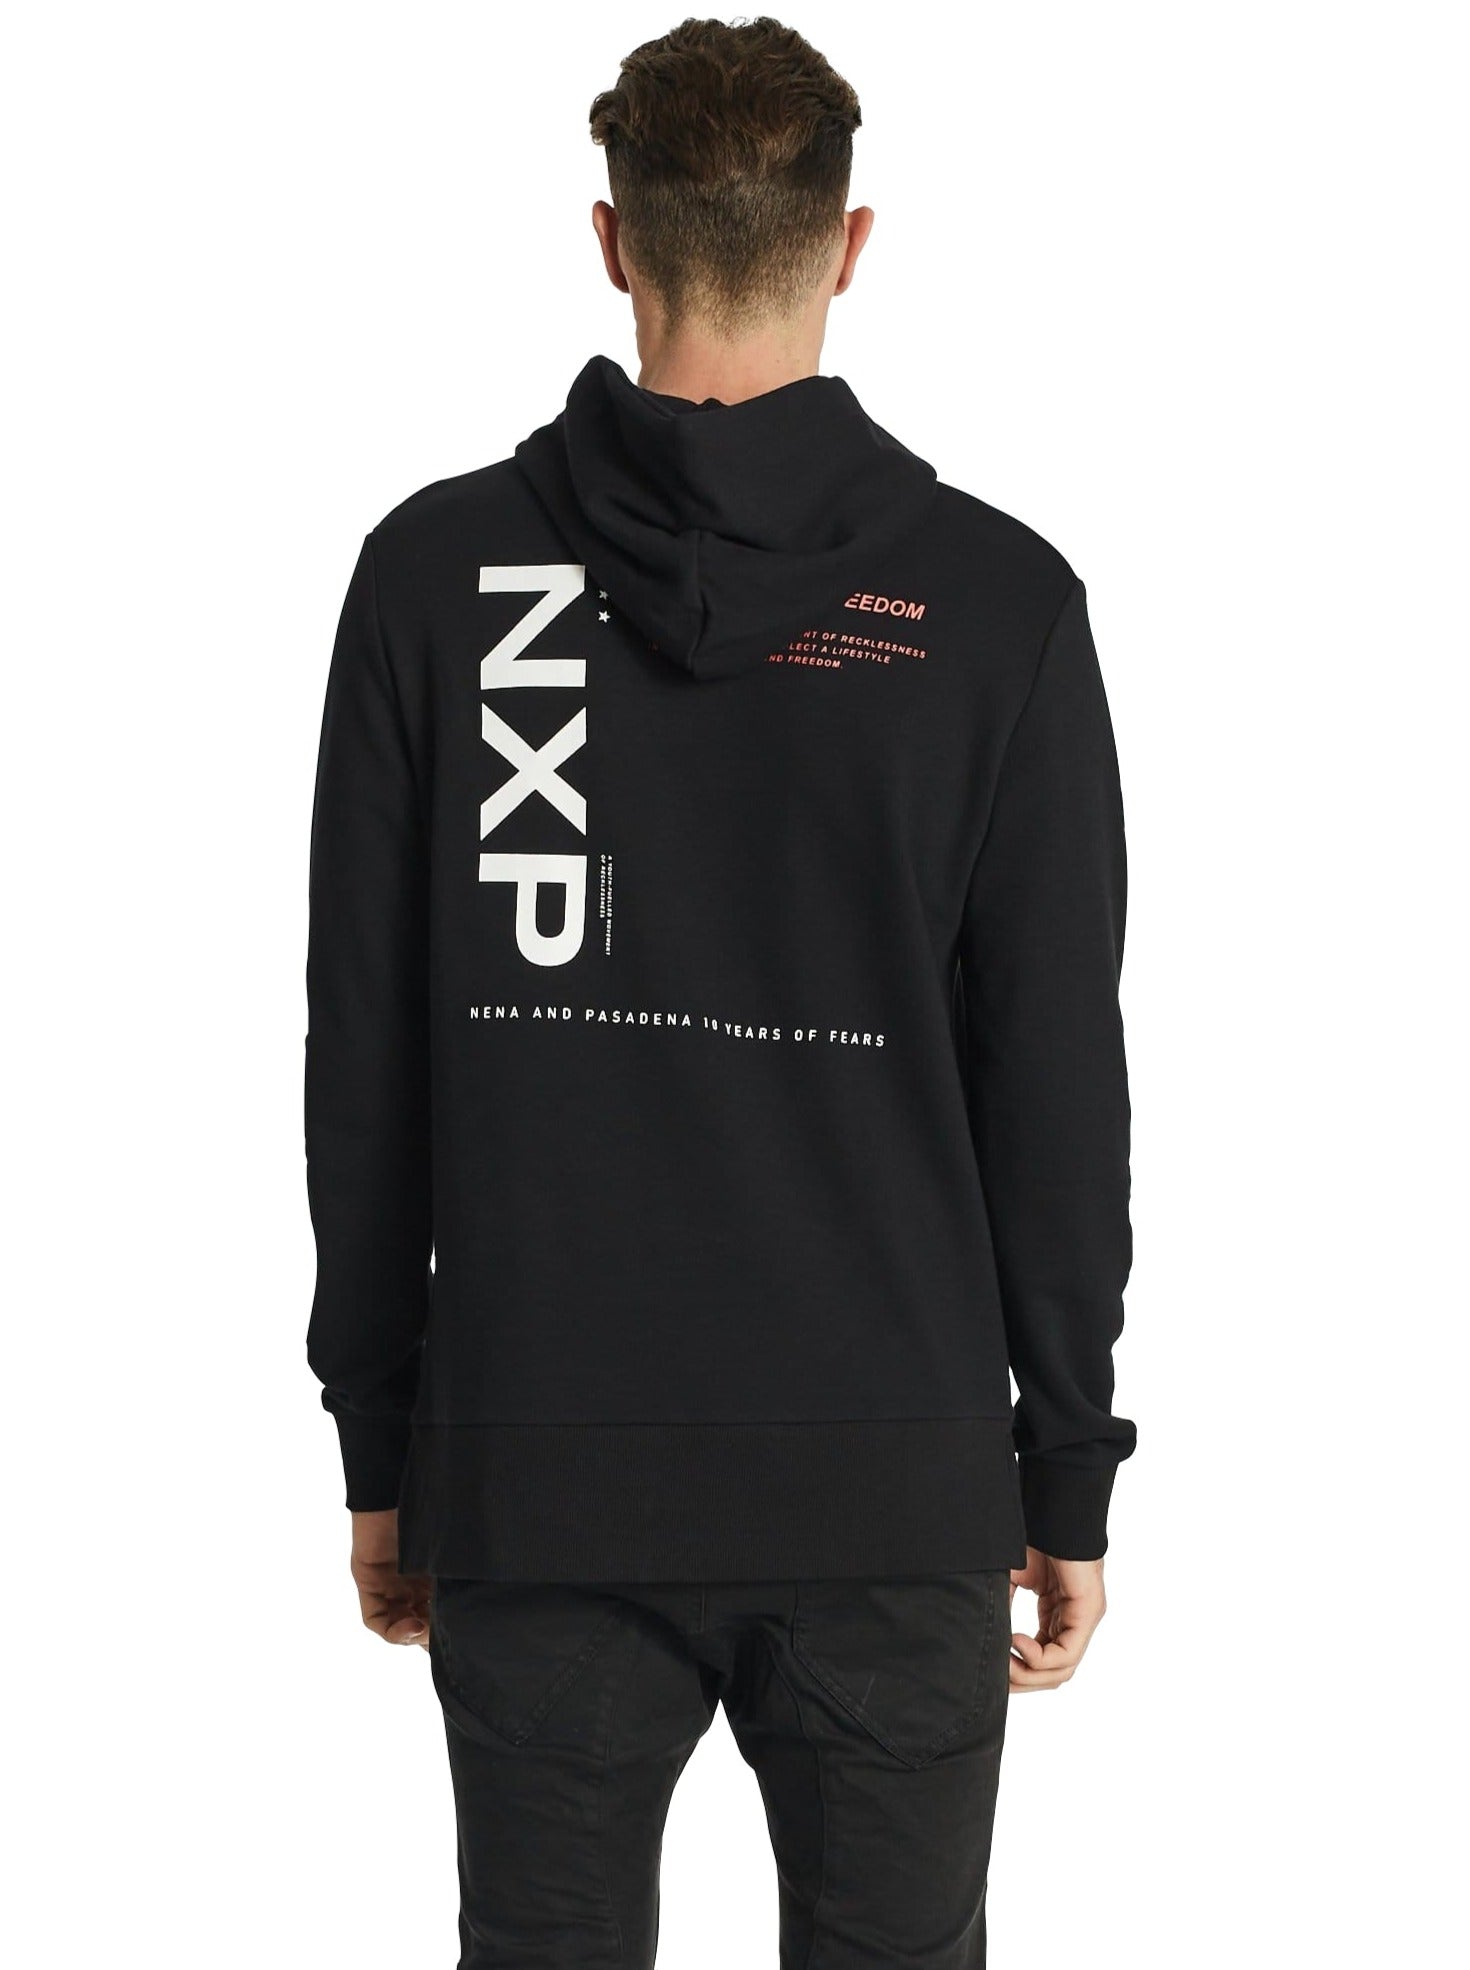 Nena And Pasadena - NXP Prominent Step Hem Hooded Sweater - Jet Black